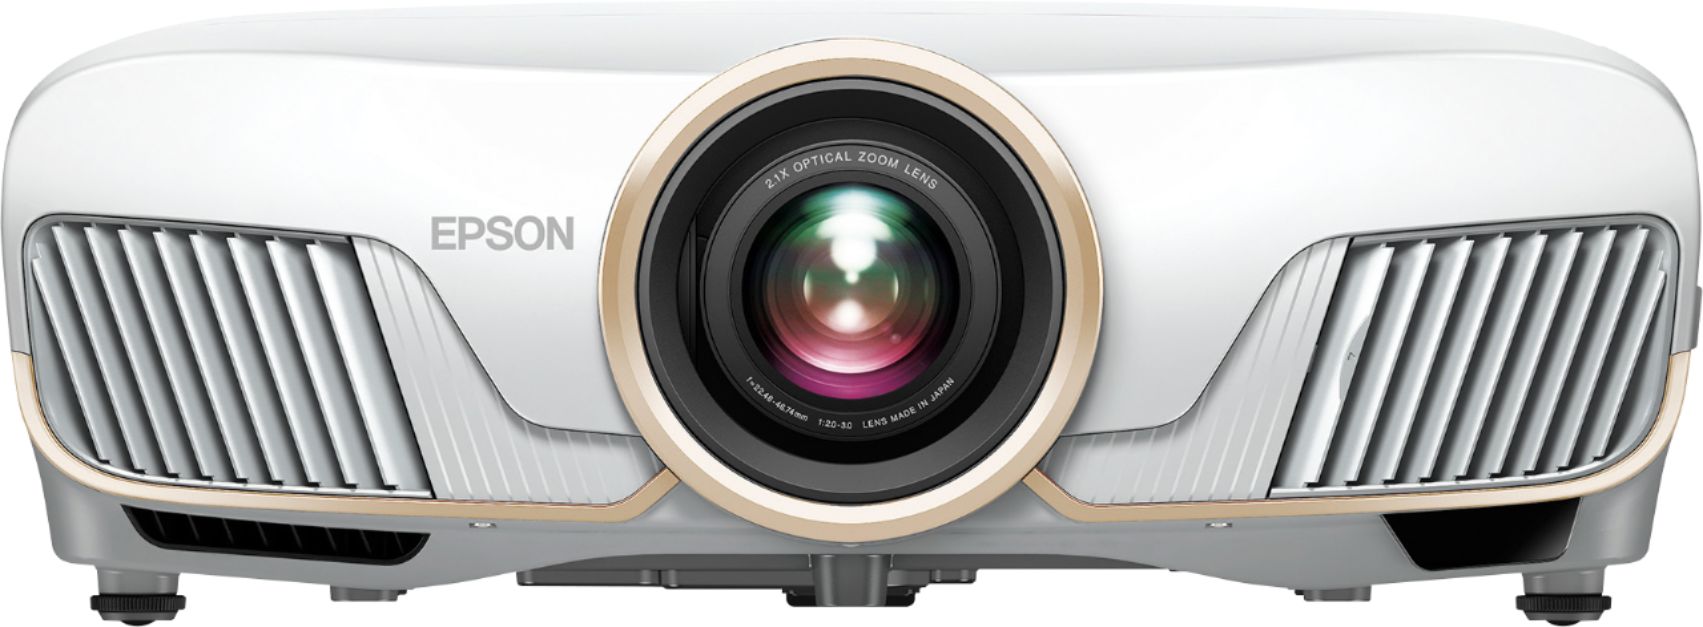 Epson Home Cinema 5050UB 4K PRO-UHD 3-Chip HDR Projector, 2600 lumens, UltraBlack, HDMI, Lens, Movies, Gaming White EPSON 5050UB PROJ V11H930020 - Best